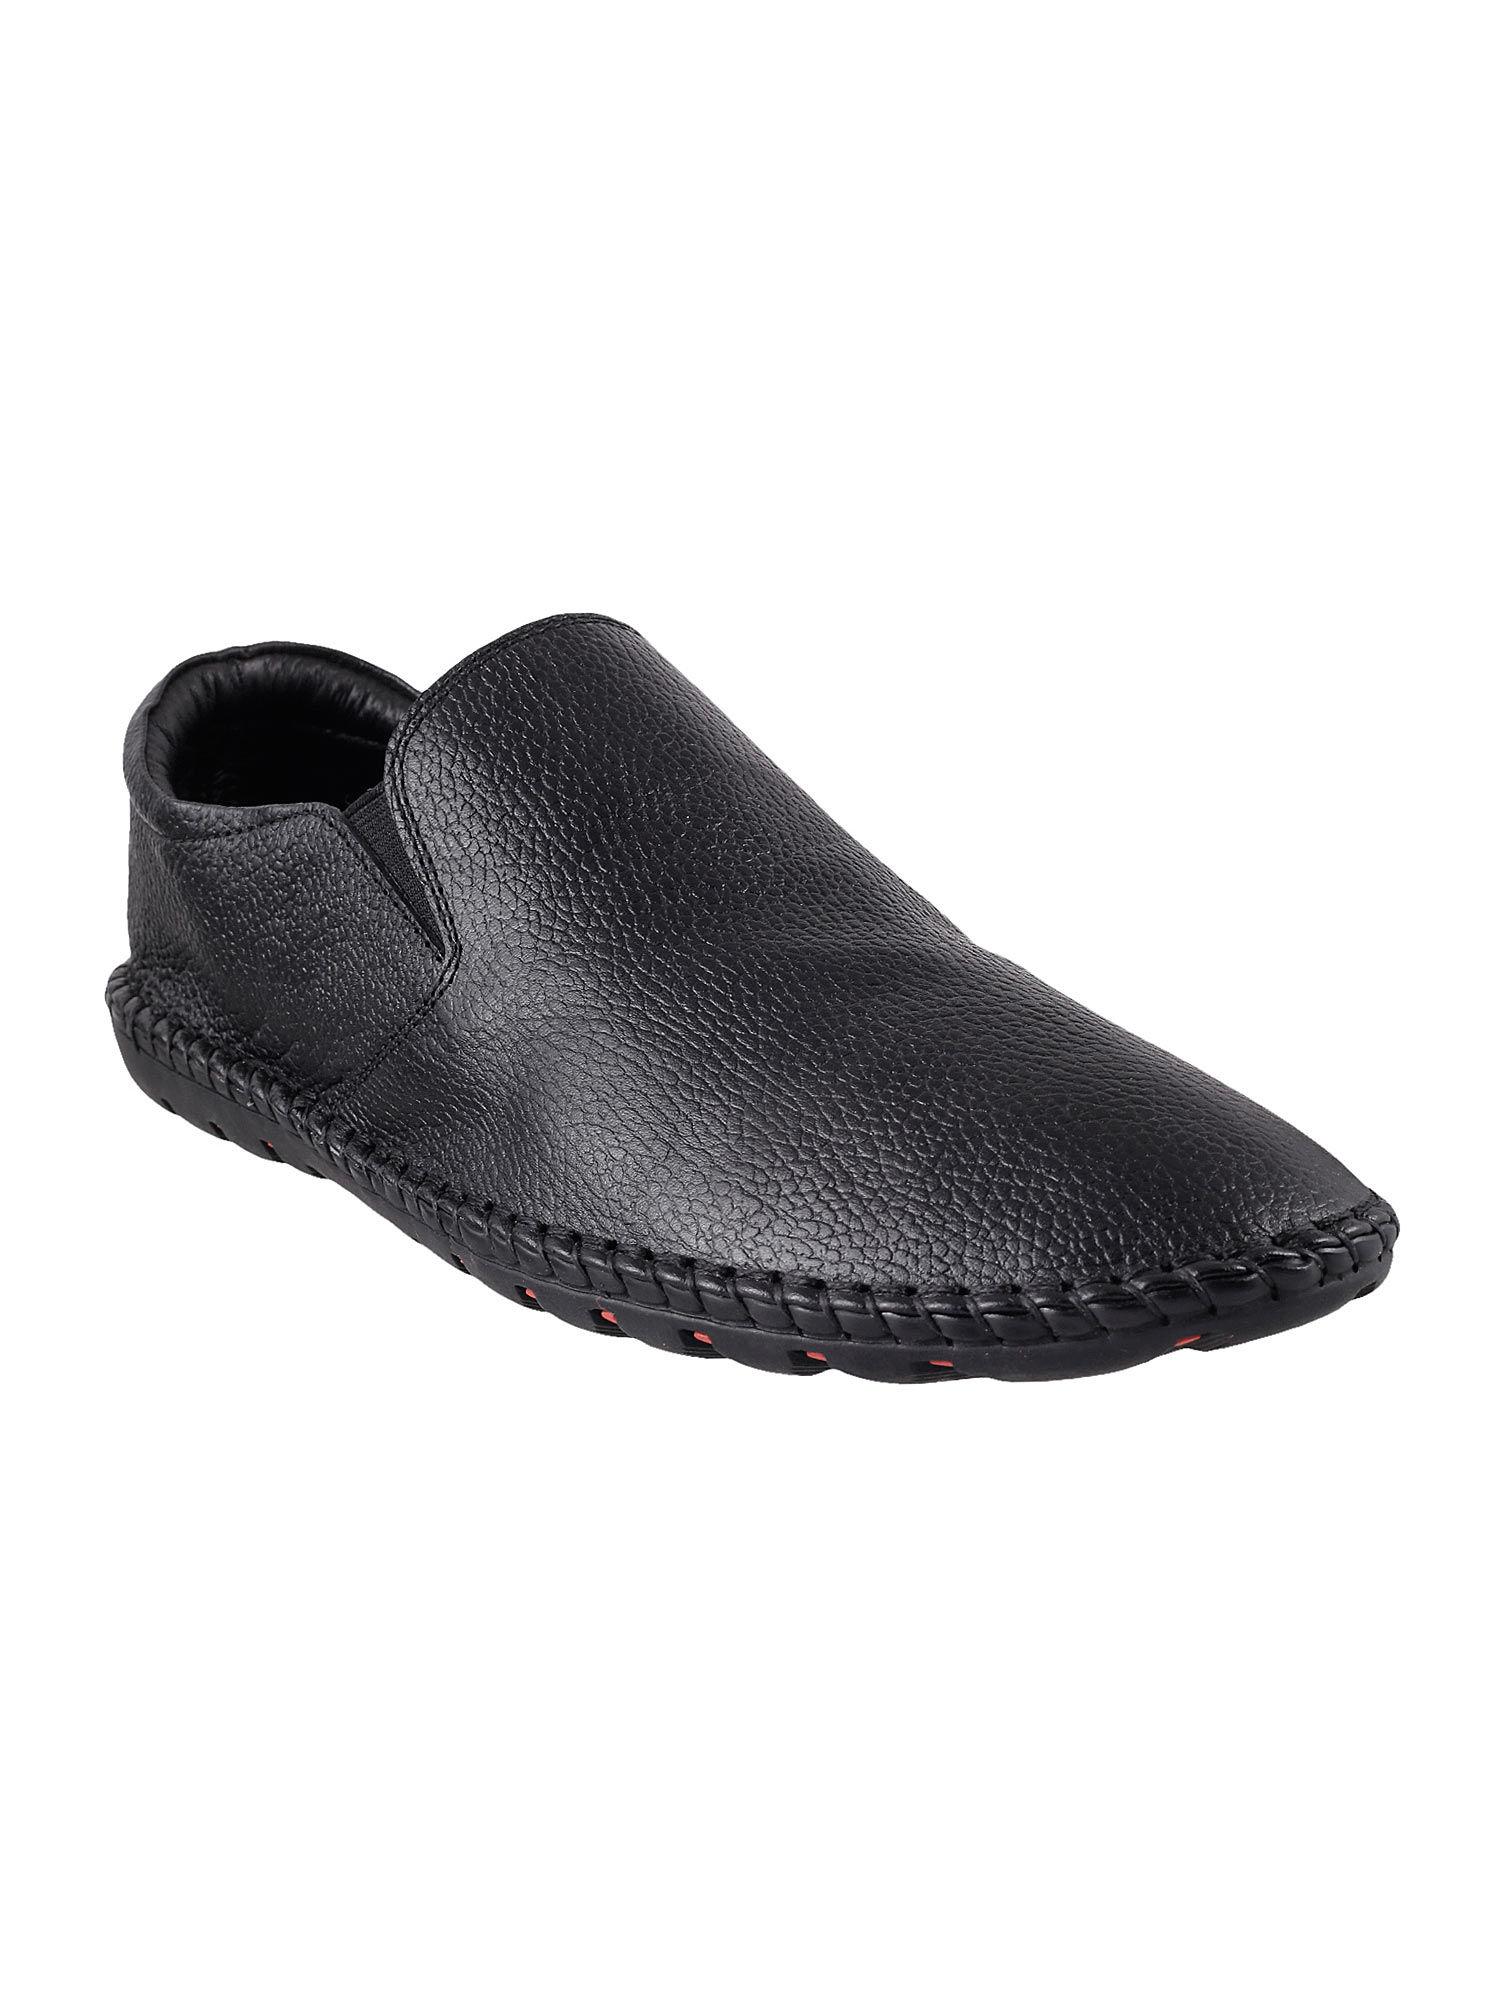 black-solid-formal-shoes